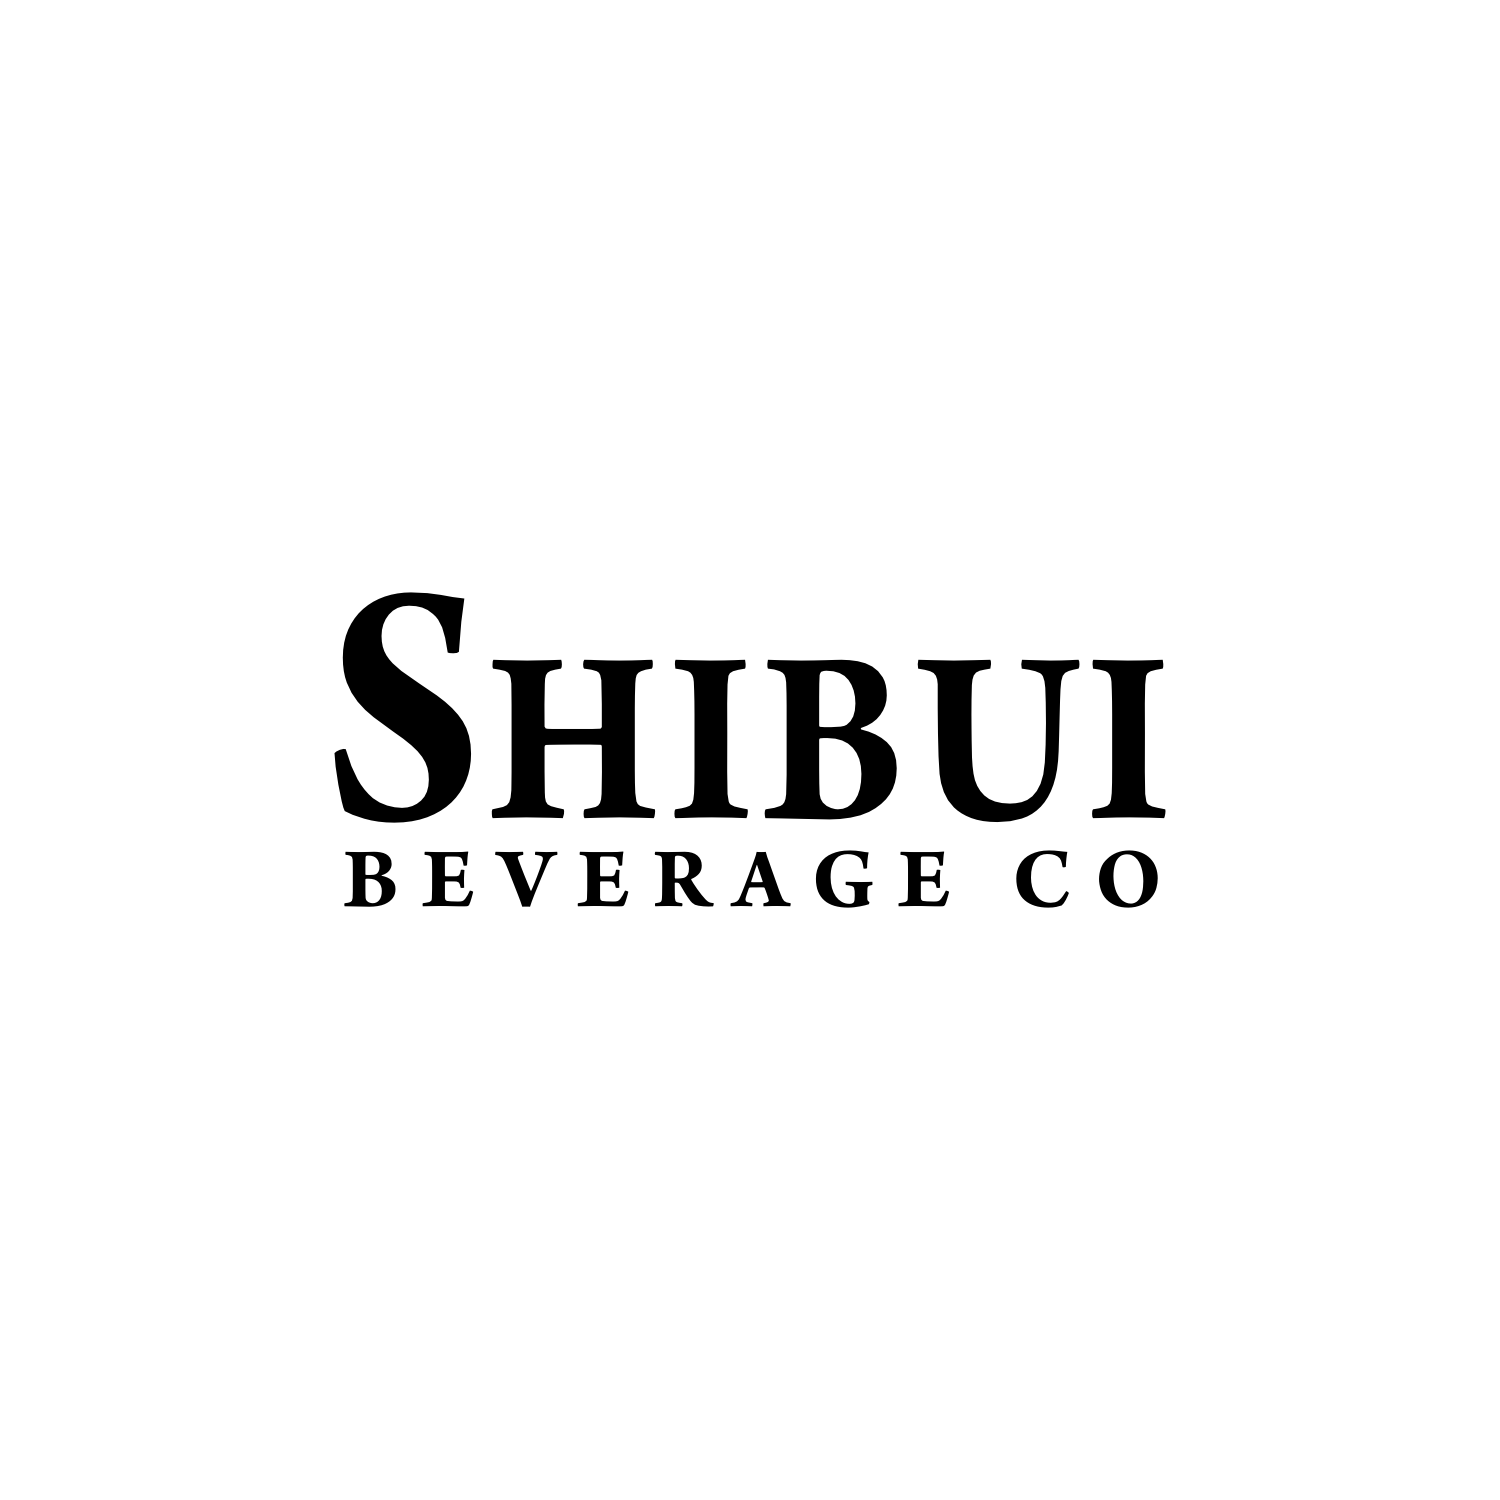 Beverage Company Logo - Bold, Modern, It Company Logo Design for SHIBUI Beverage Co by ...